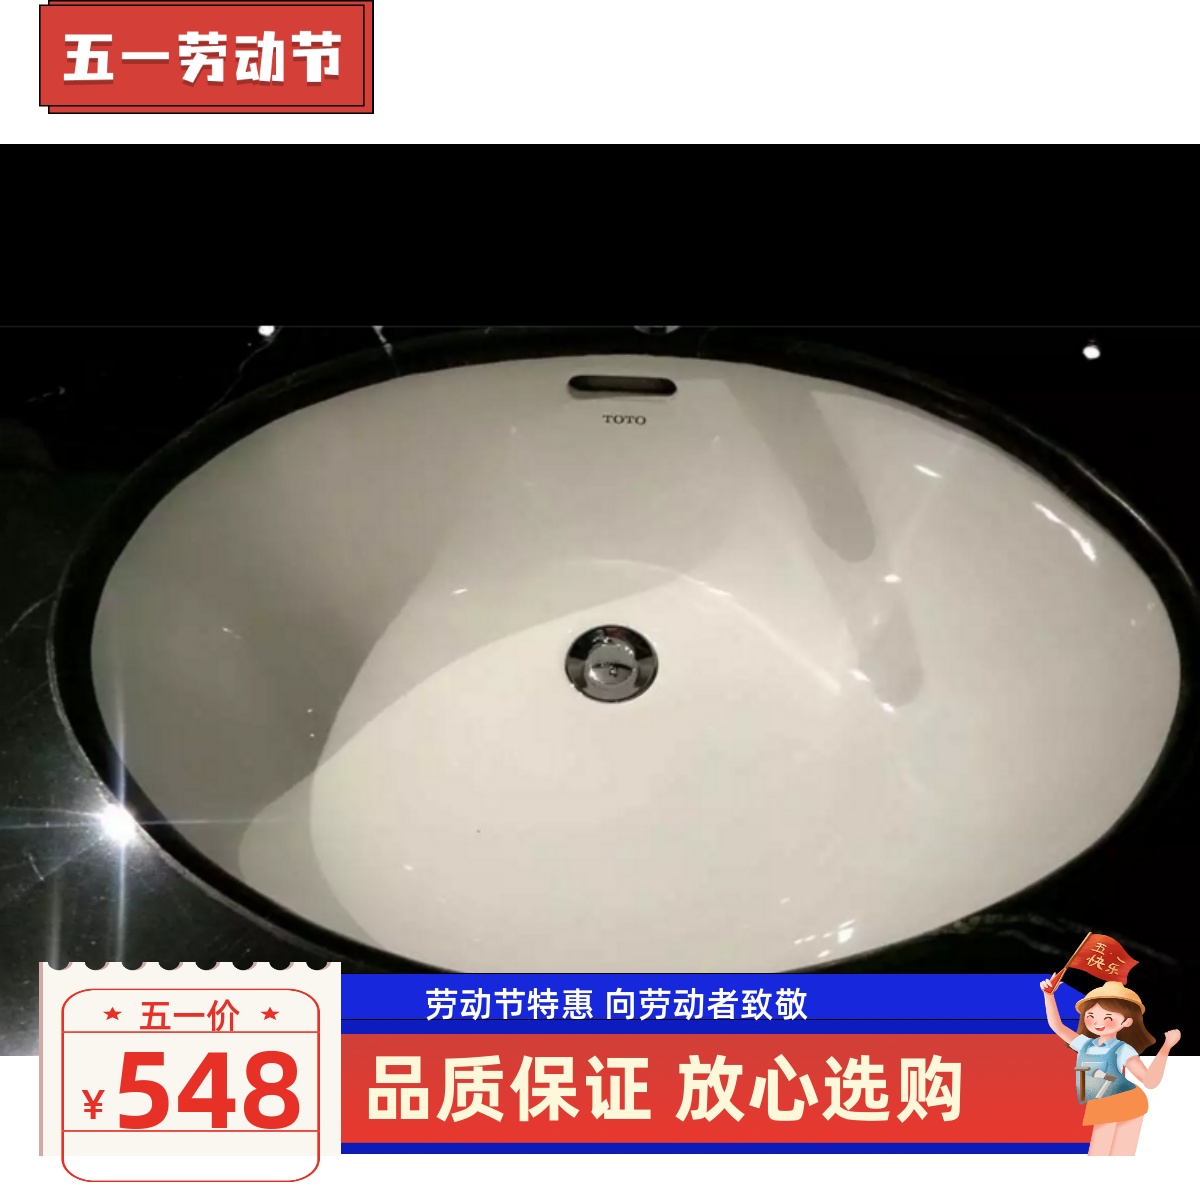 TOTO豪华洁具 高级卫浴 台面镶嵌型洗脸盆(智洁) LW548B 台下盆